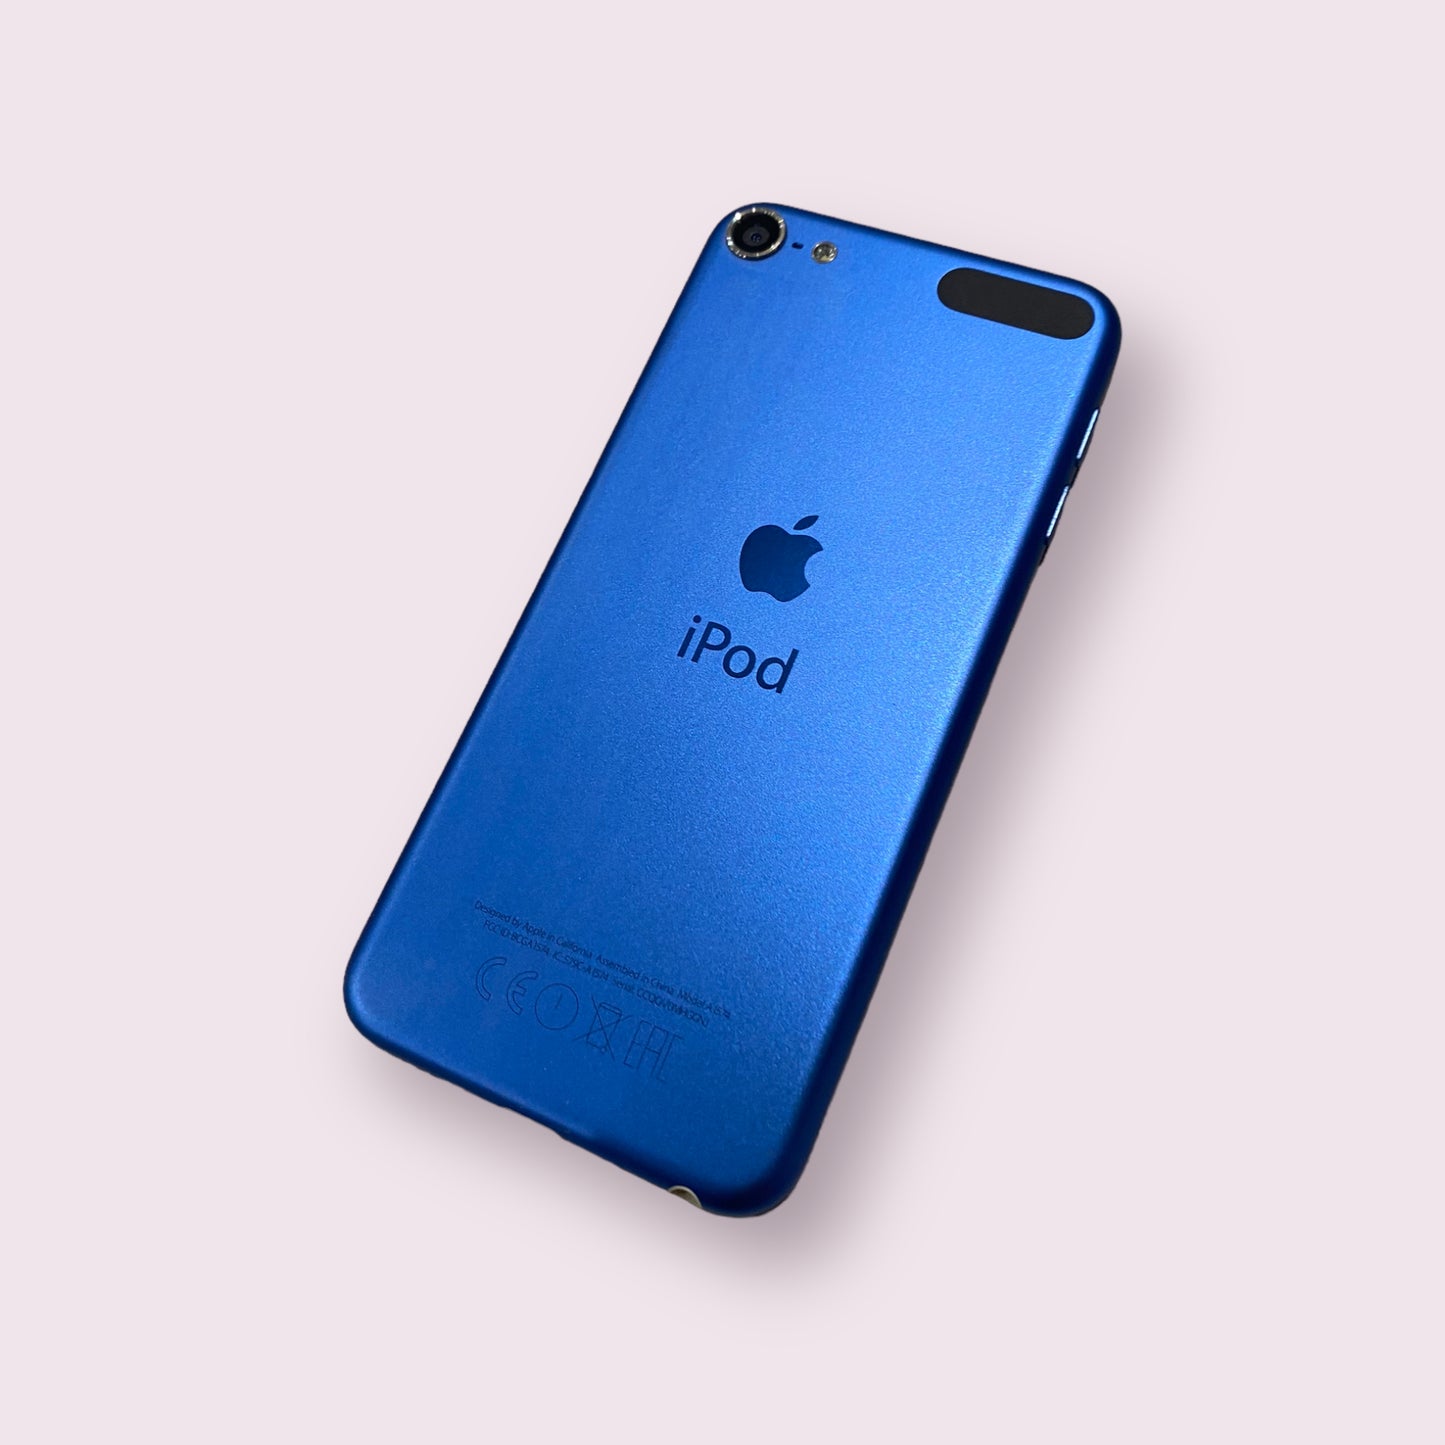 Apple iPod Touch 6th Gen Generation 32GB Blue MP3 - Grade B+